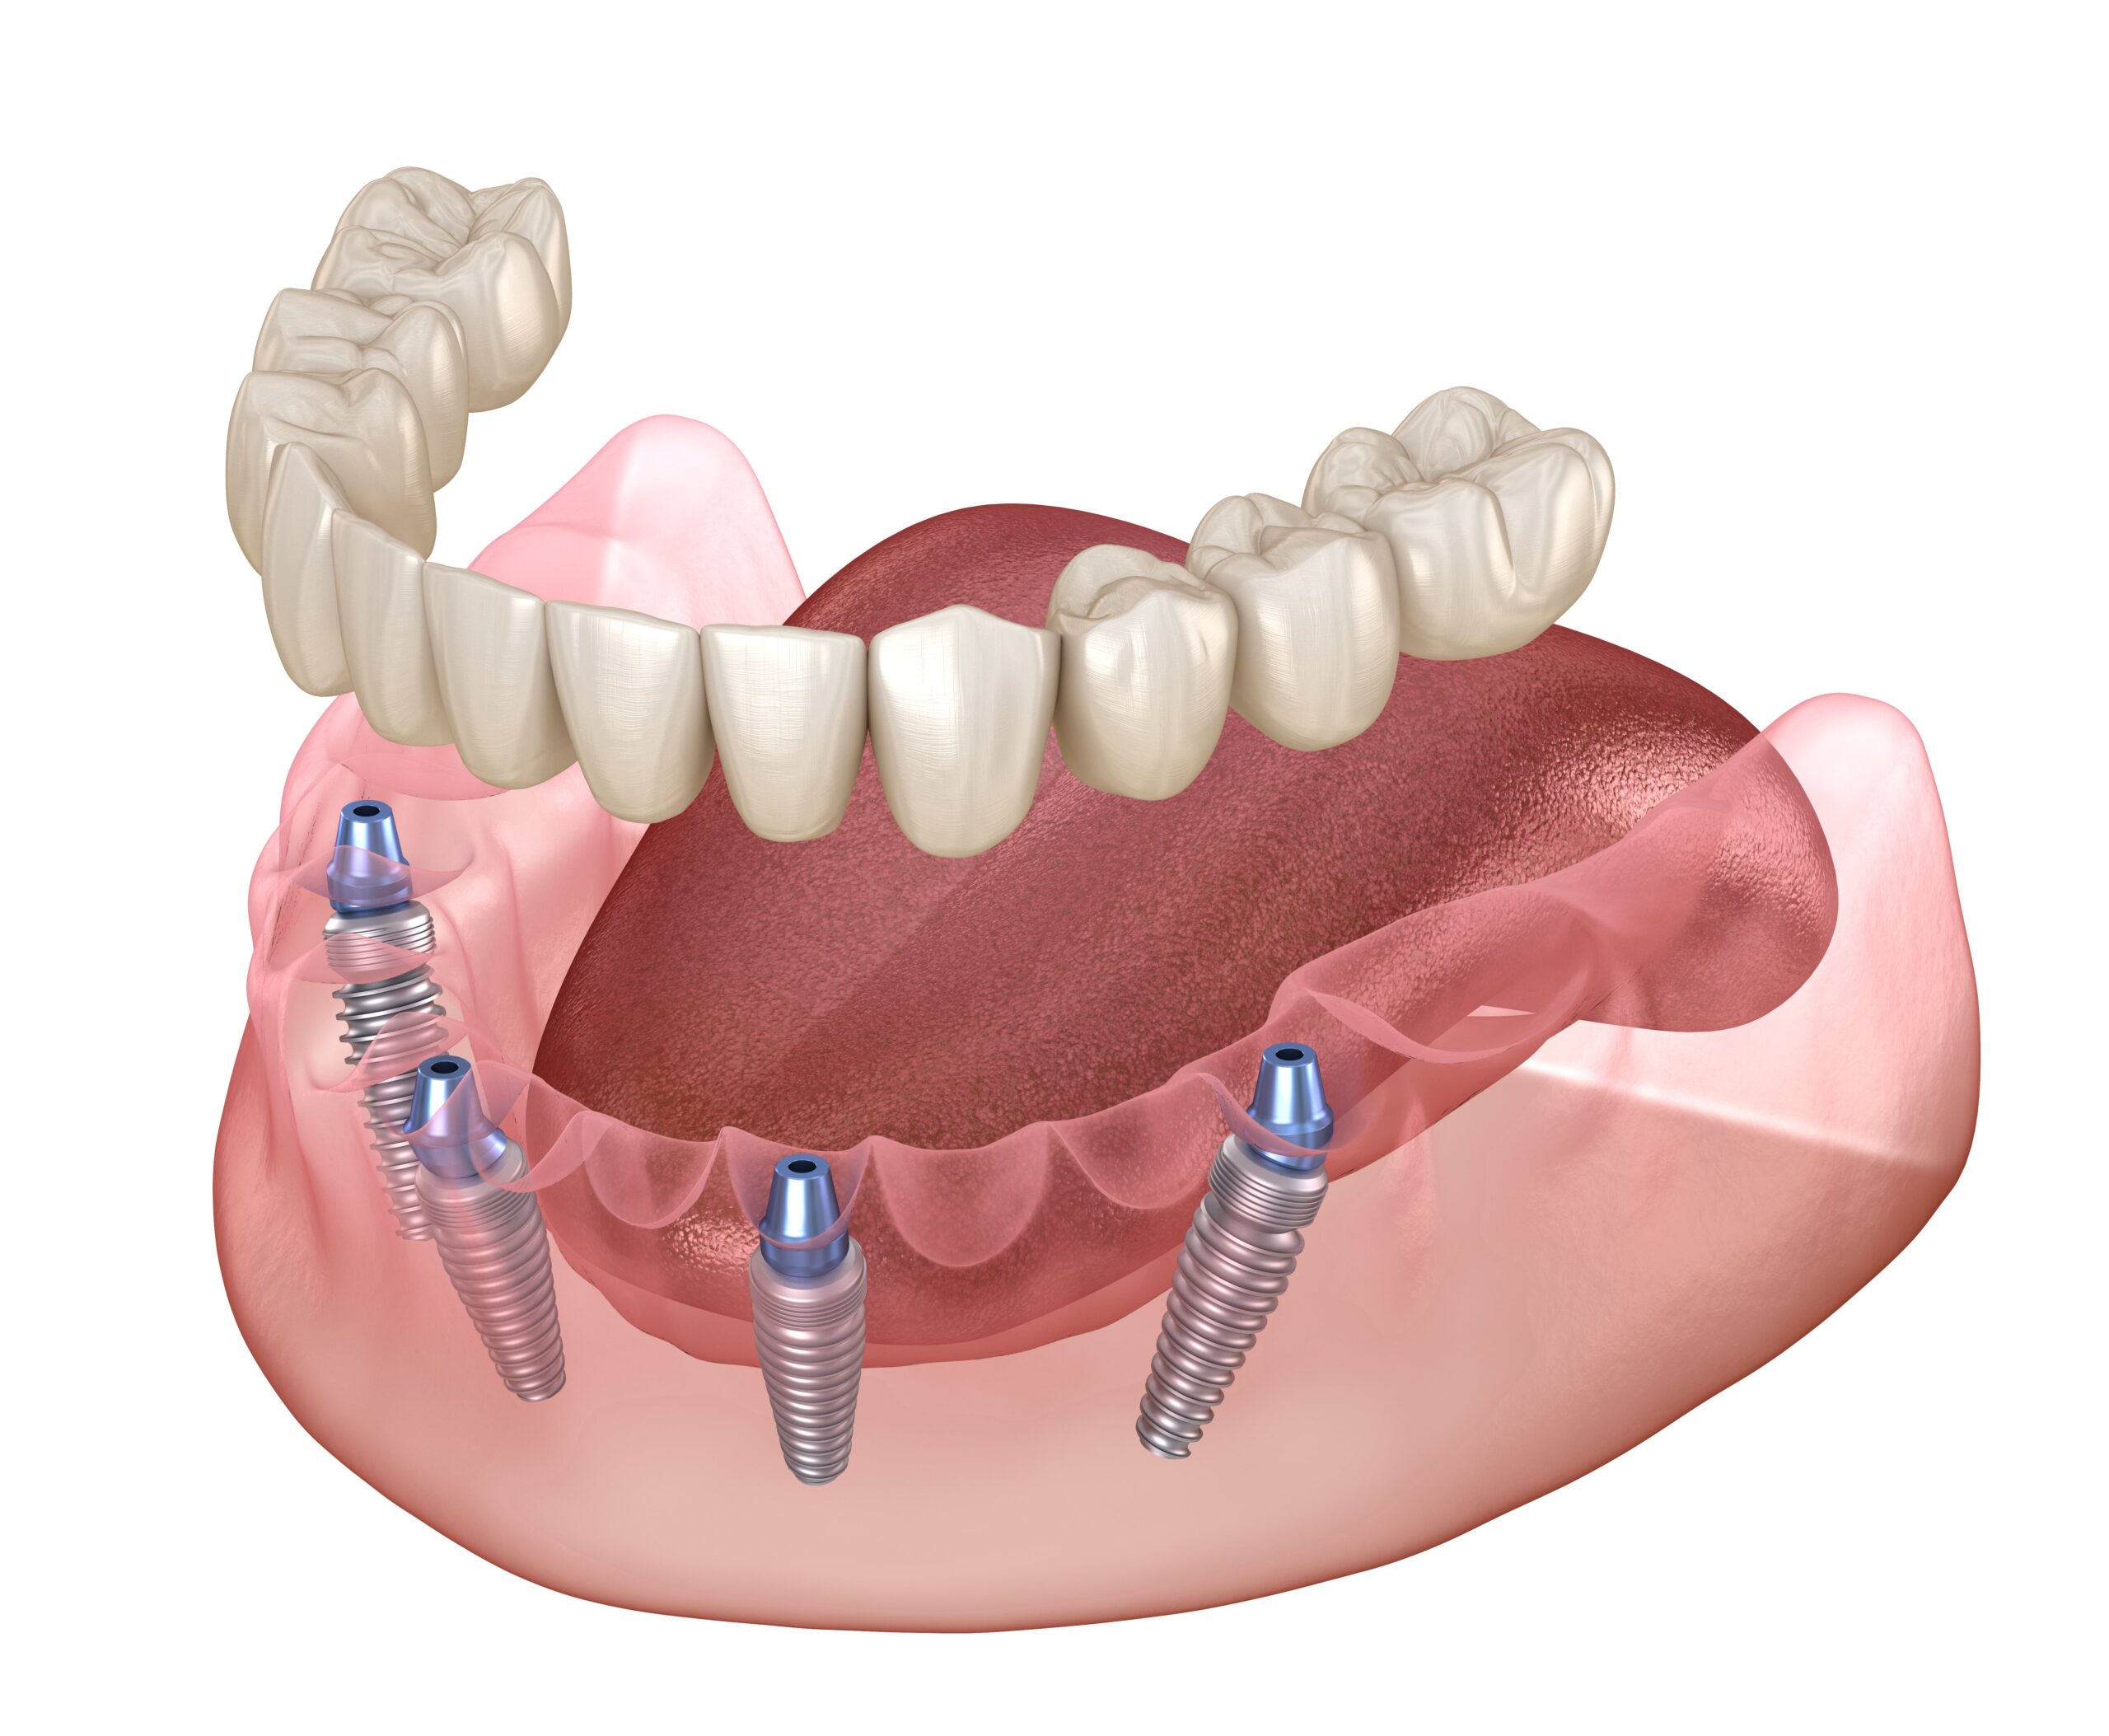  При имплантации по методу «ВСЕ-НА-4» и «ВСЕ-НА-6» удаление зубов бесплатно